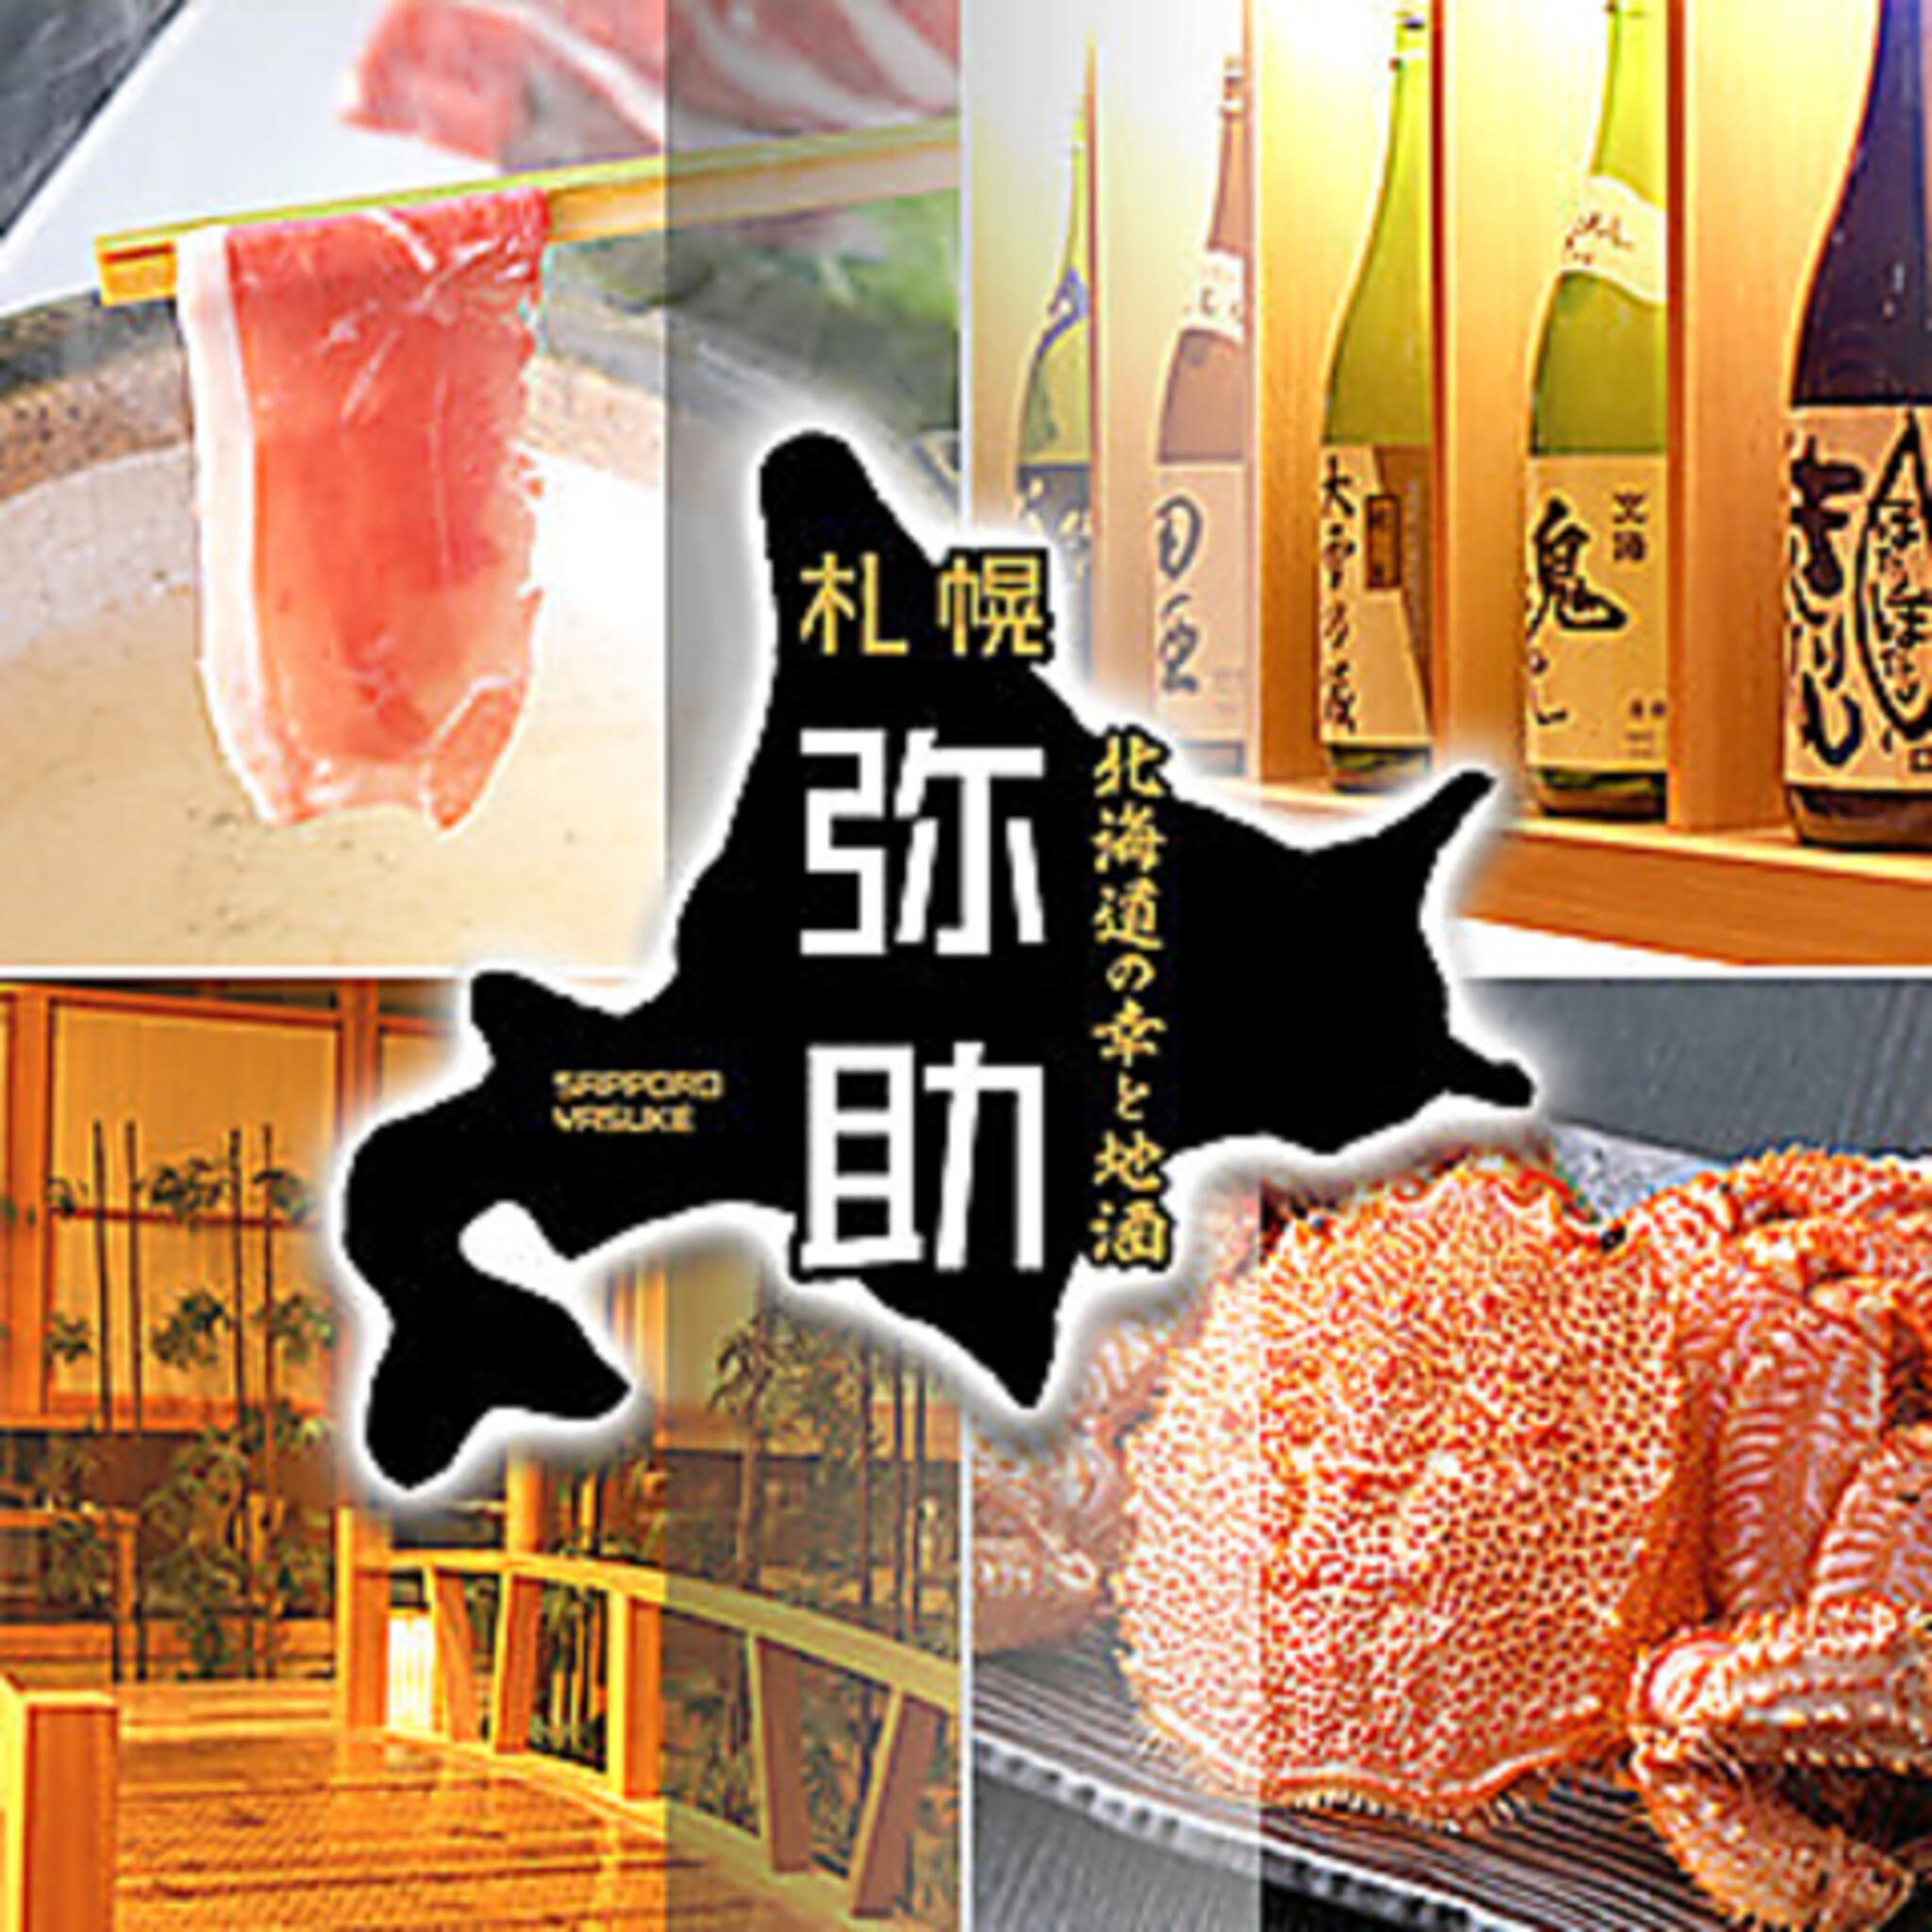 北海道の幸と地酒 札幌弥助 海浜幕張店の代表写真4